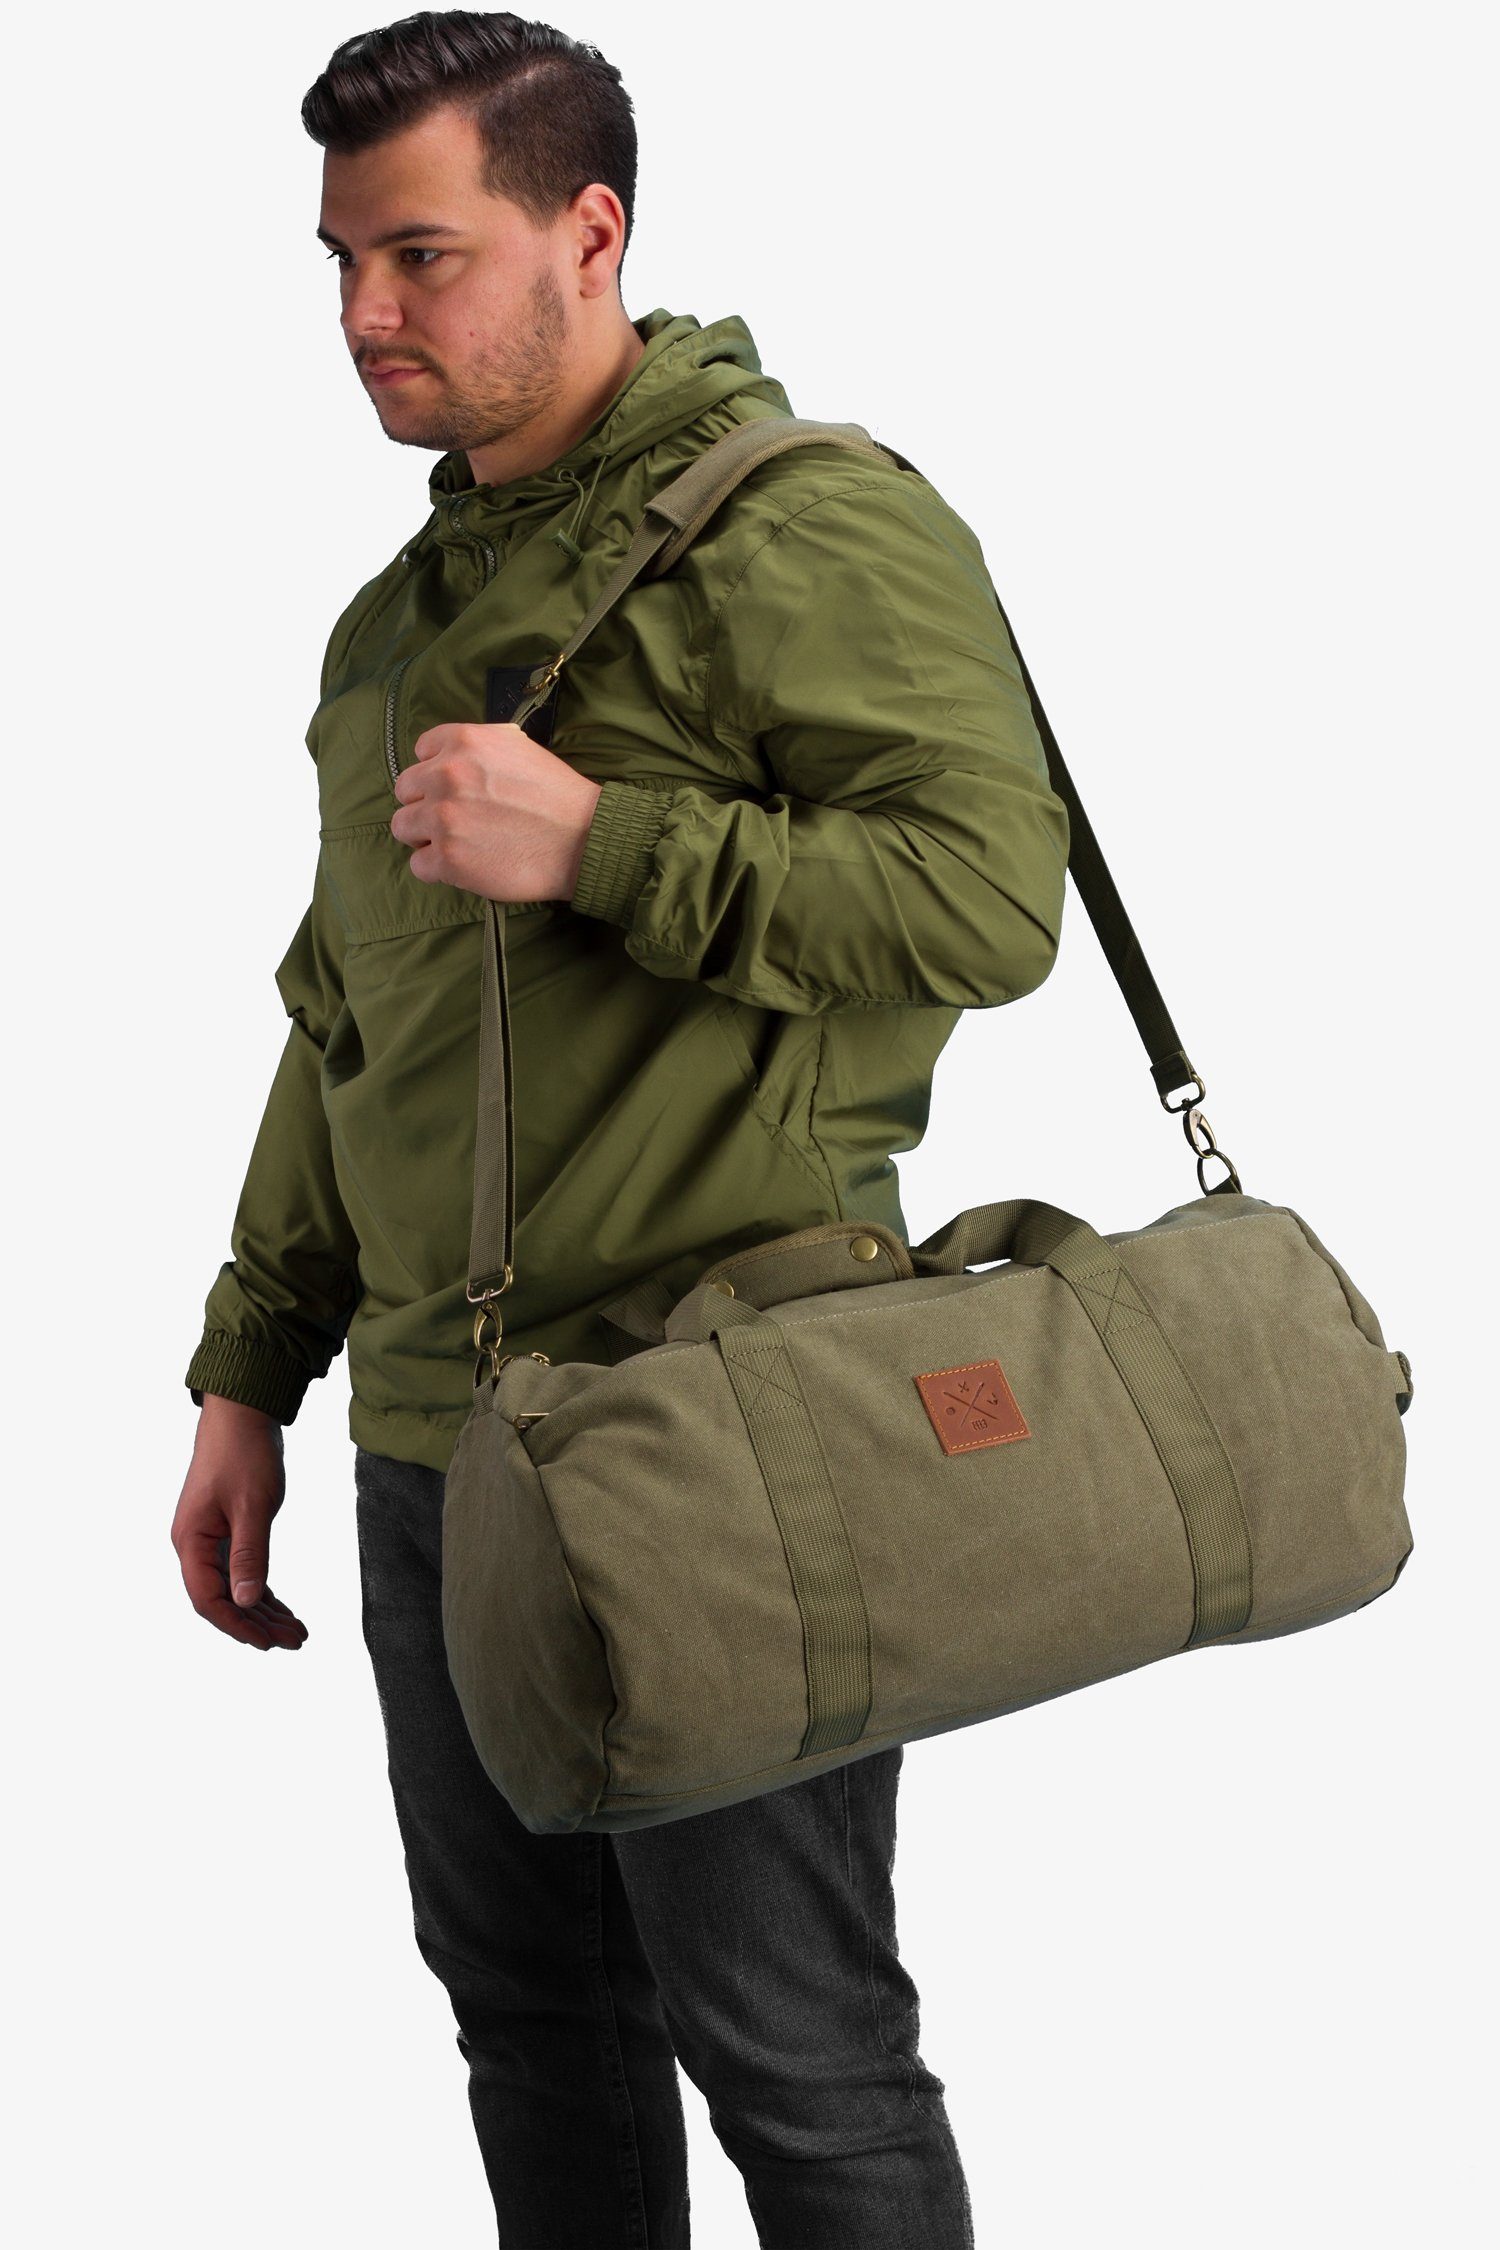 Manufaktur13 Sporttasche Canvas Barrel Bag Duffel Olive/Khaki 24L Sporttasche, - Bag, Fassungsvermögen